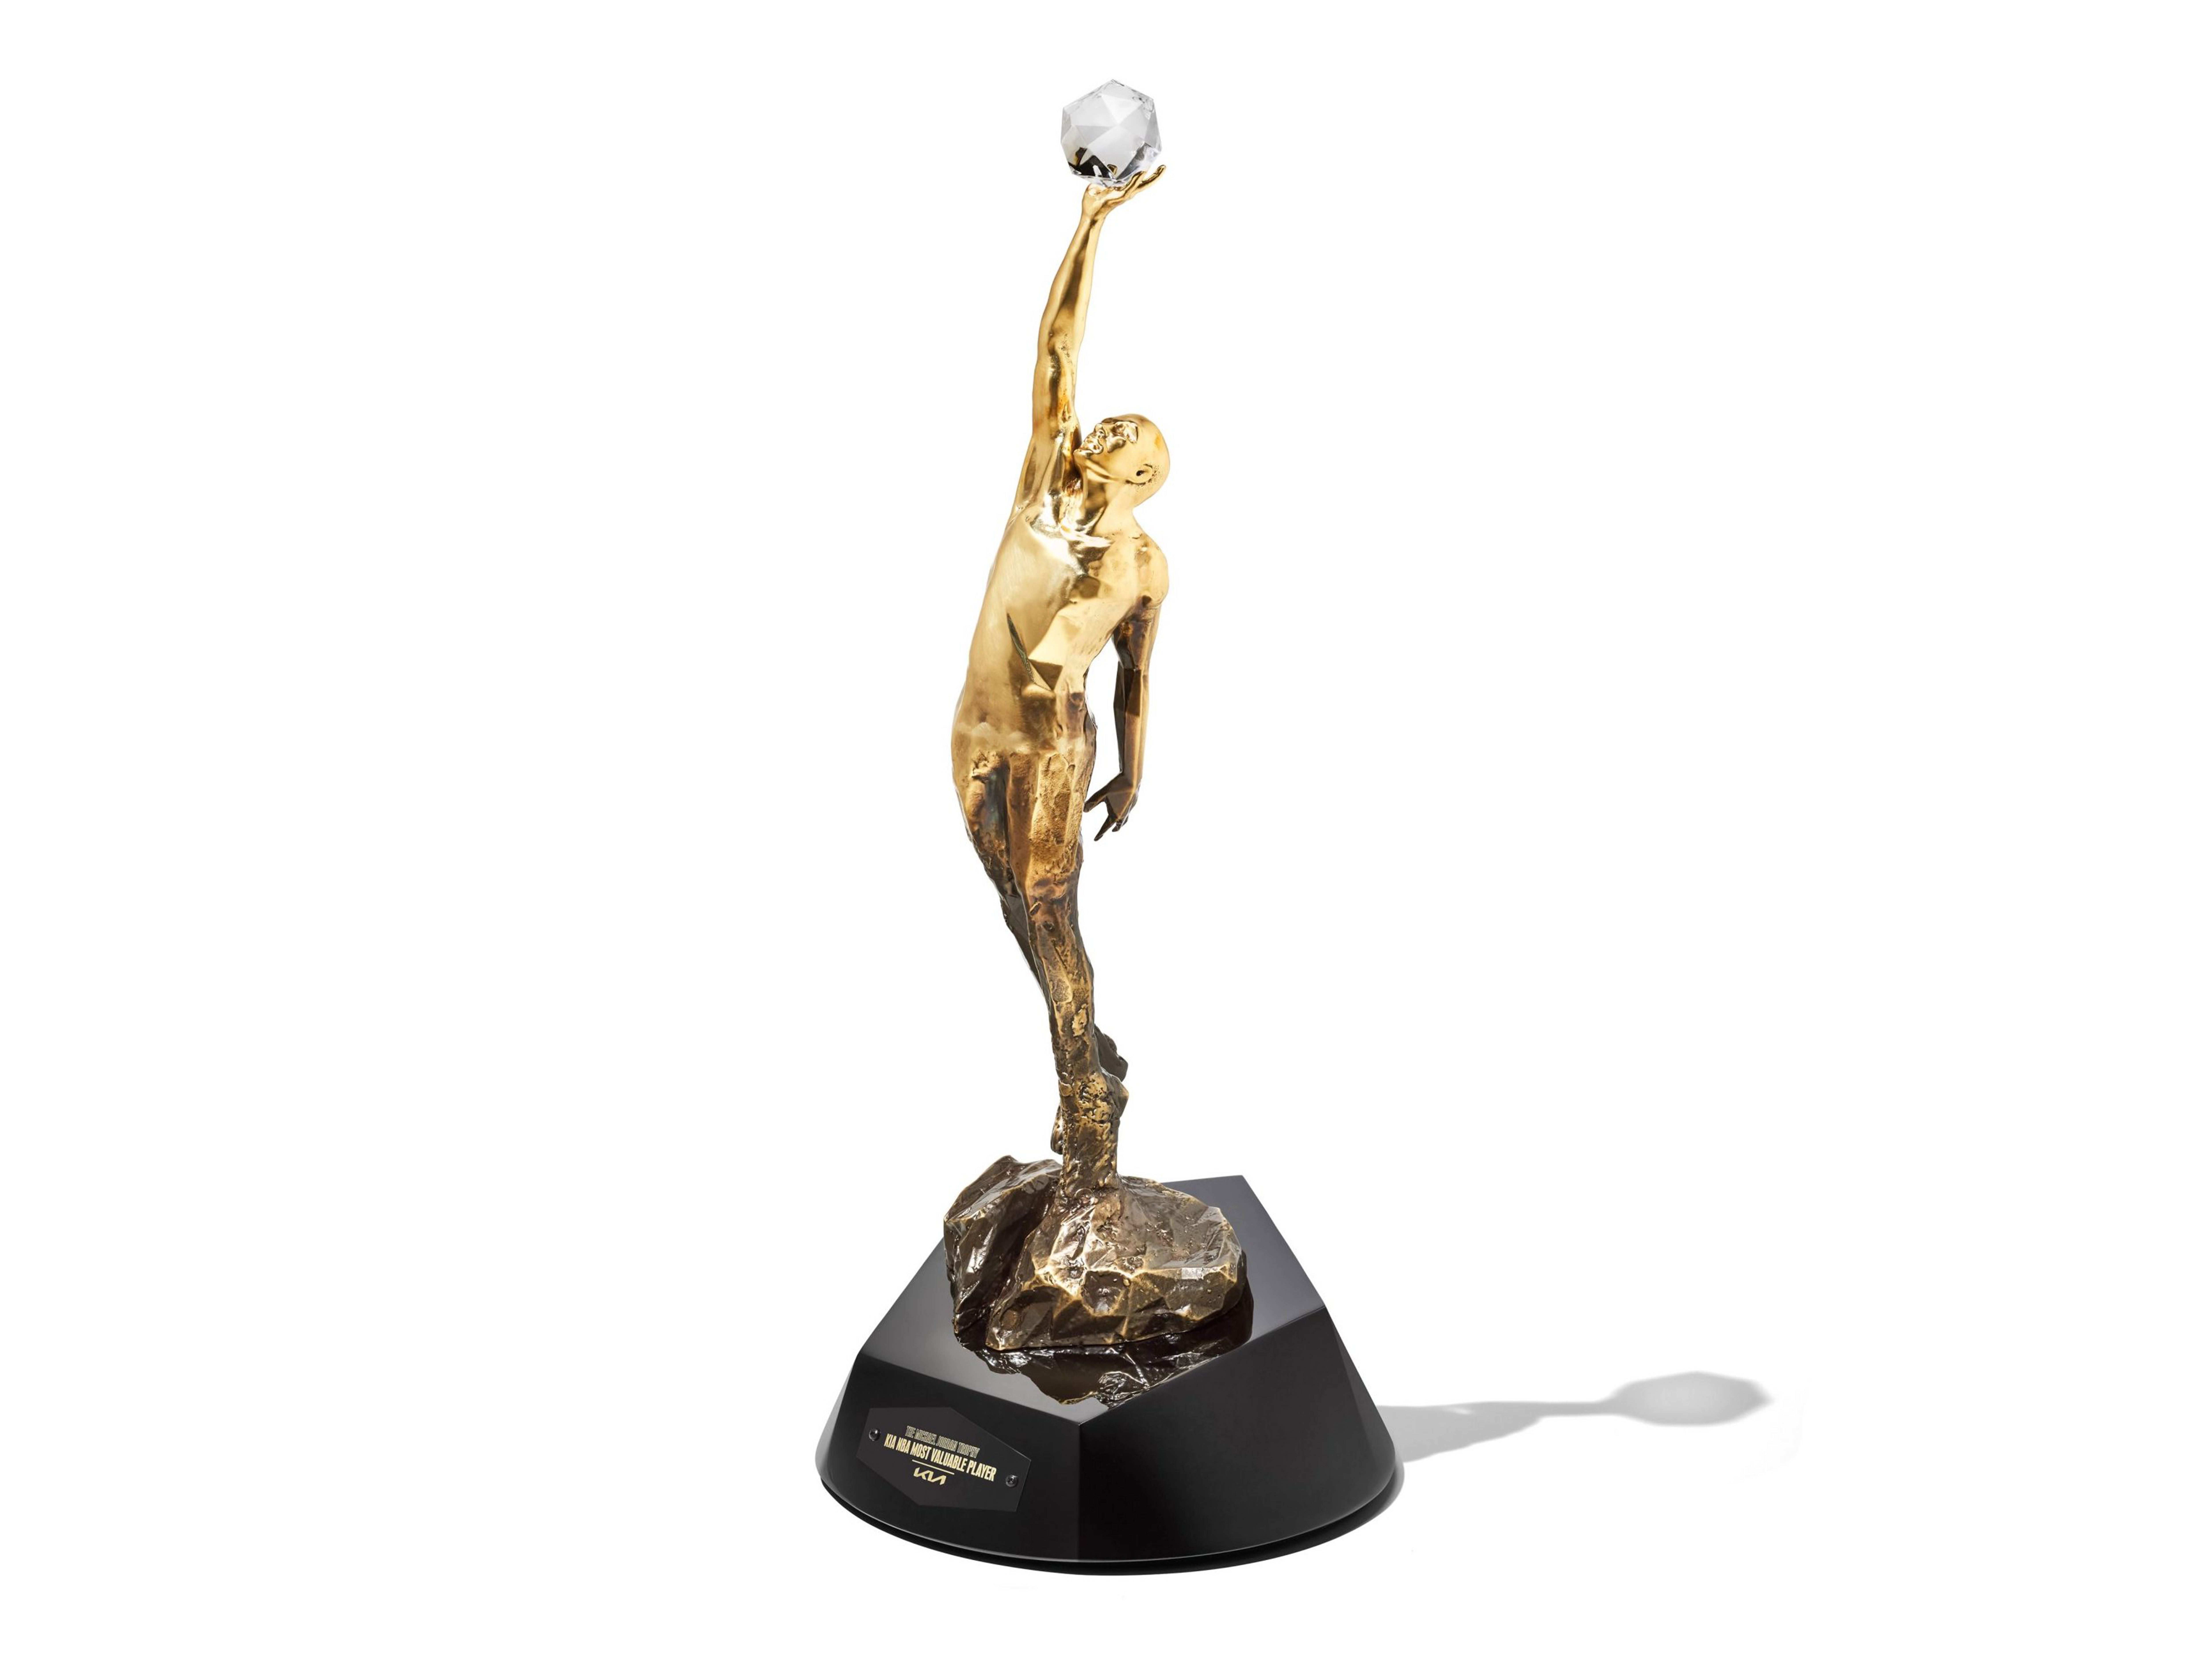 El trofeo Michael Jordan al MVP de las Finales de la NBA.  –FOLLETO DE LA NBA